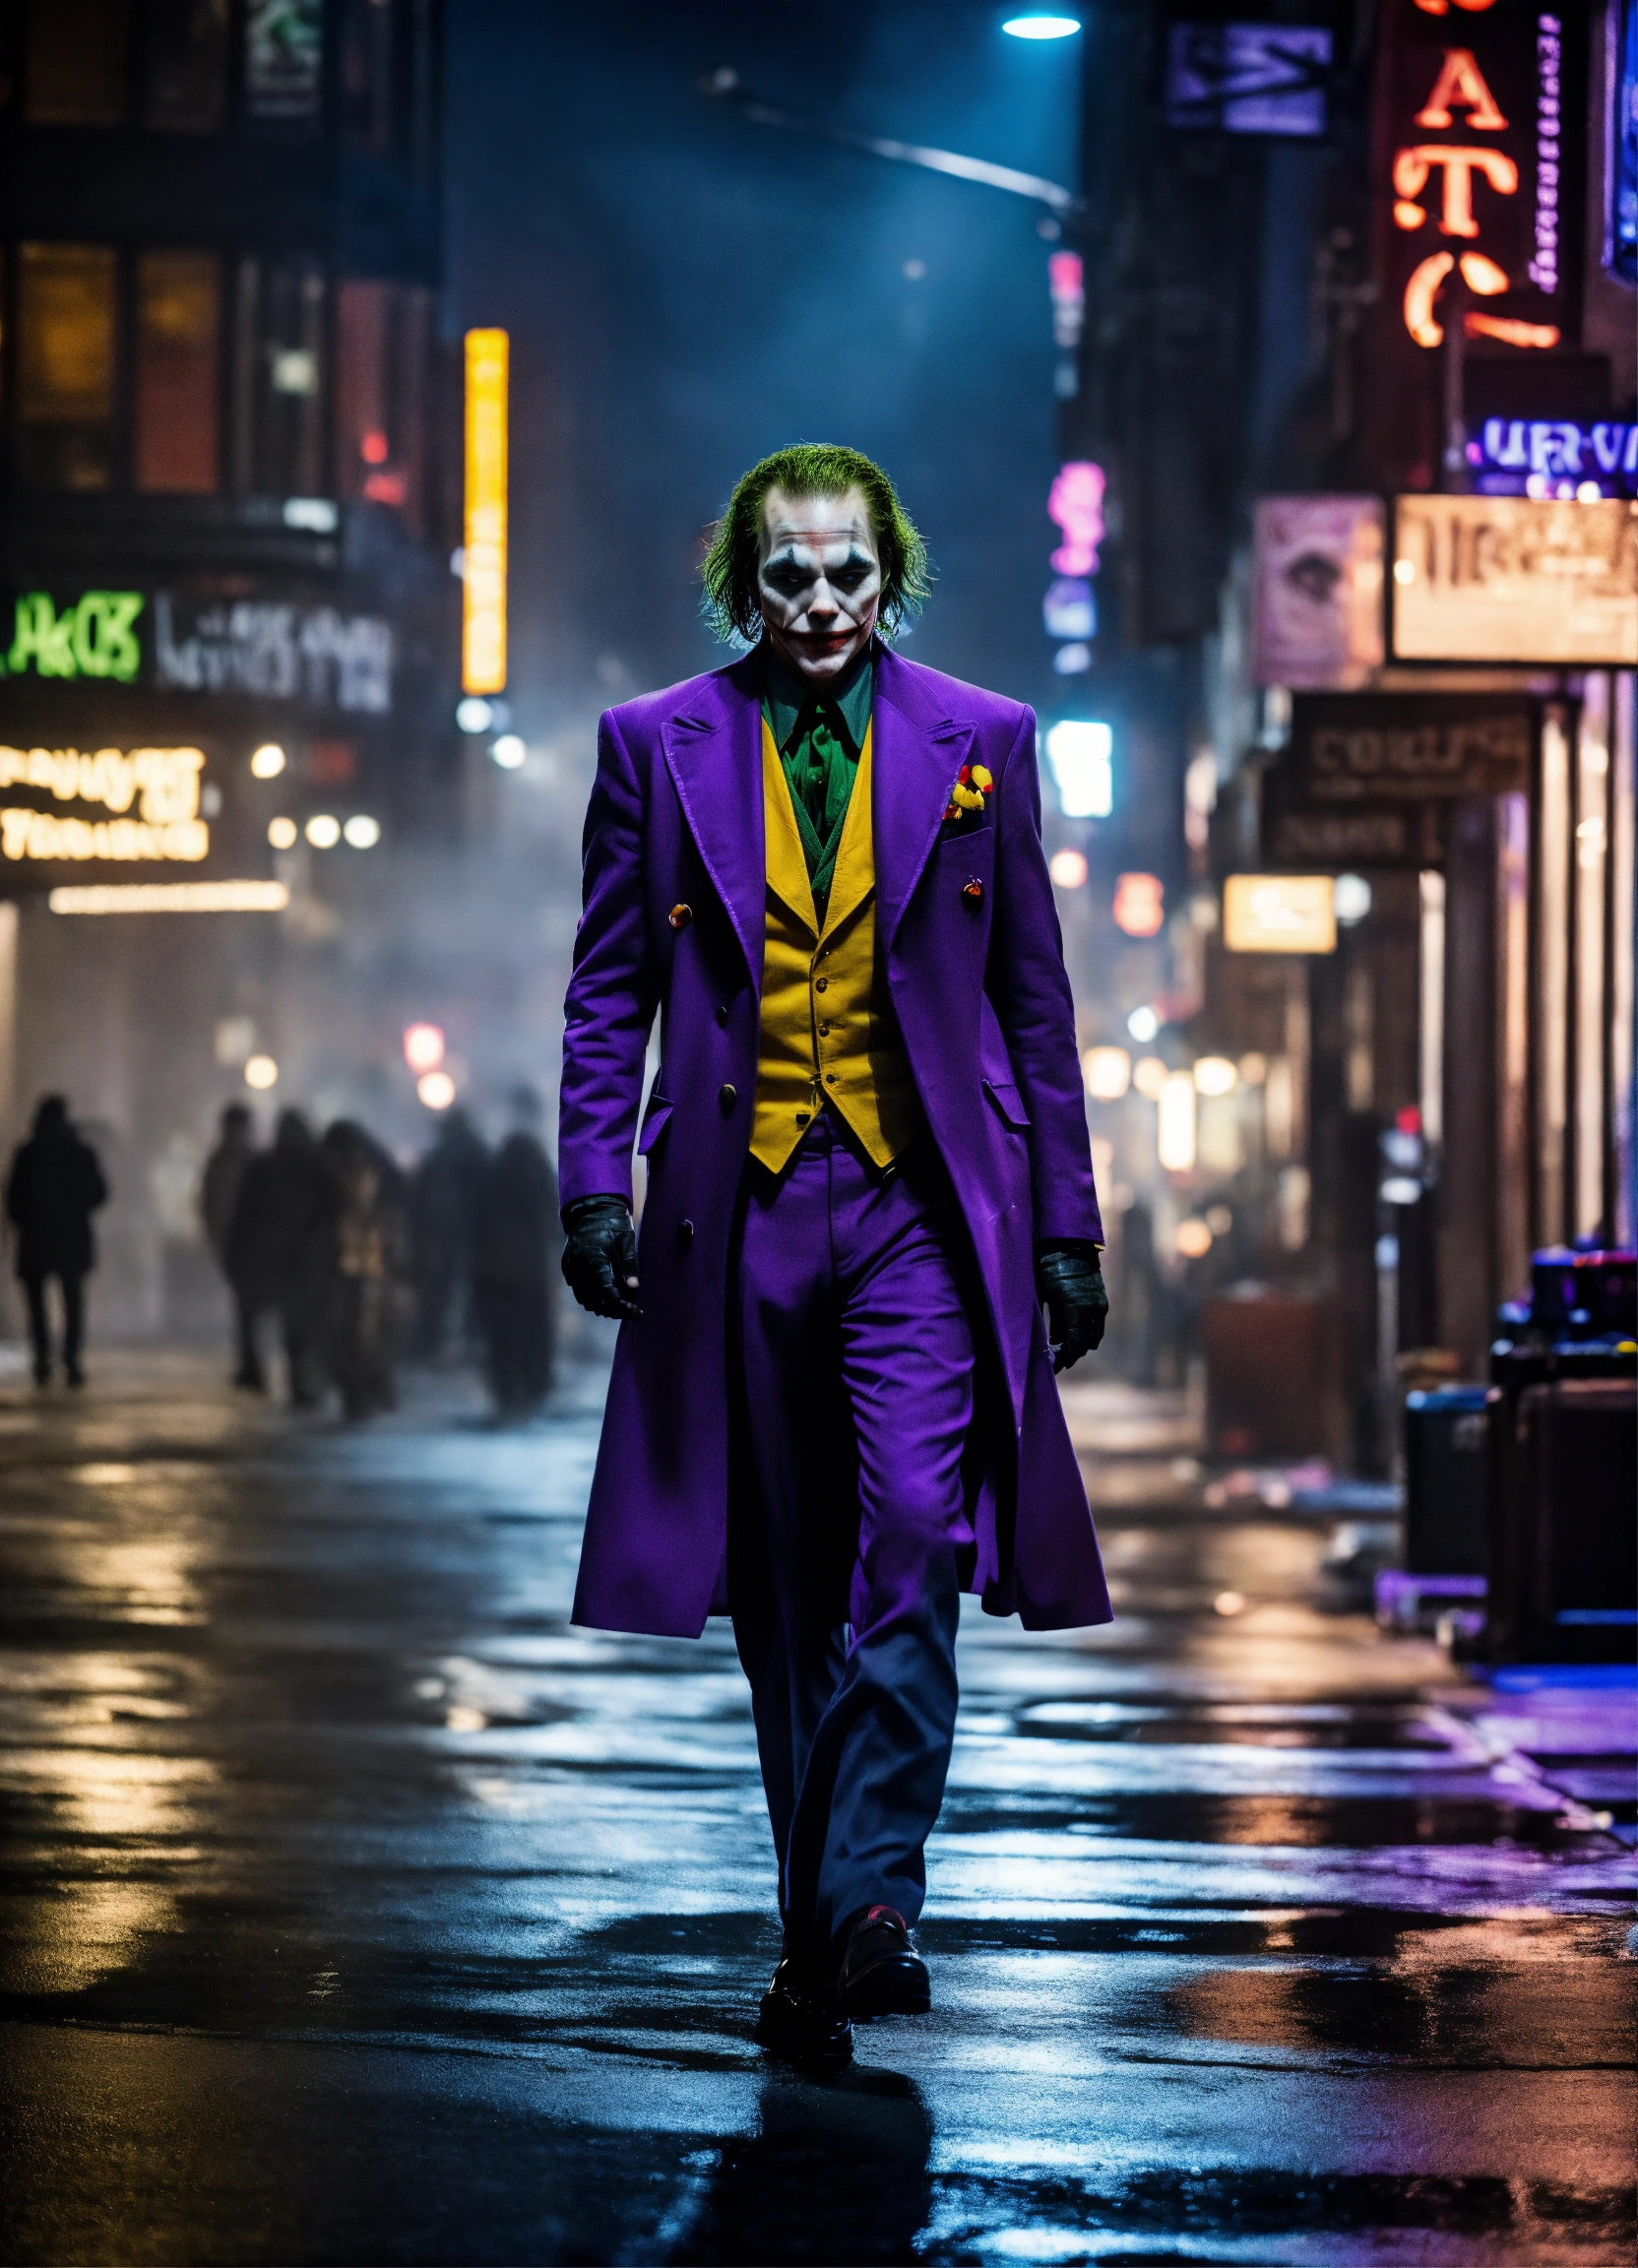 Lexica - The joker walking through streets of new york, stunning photo ...